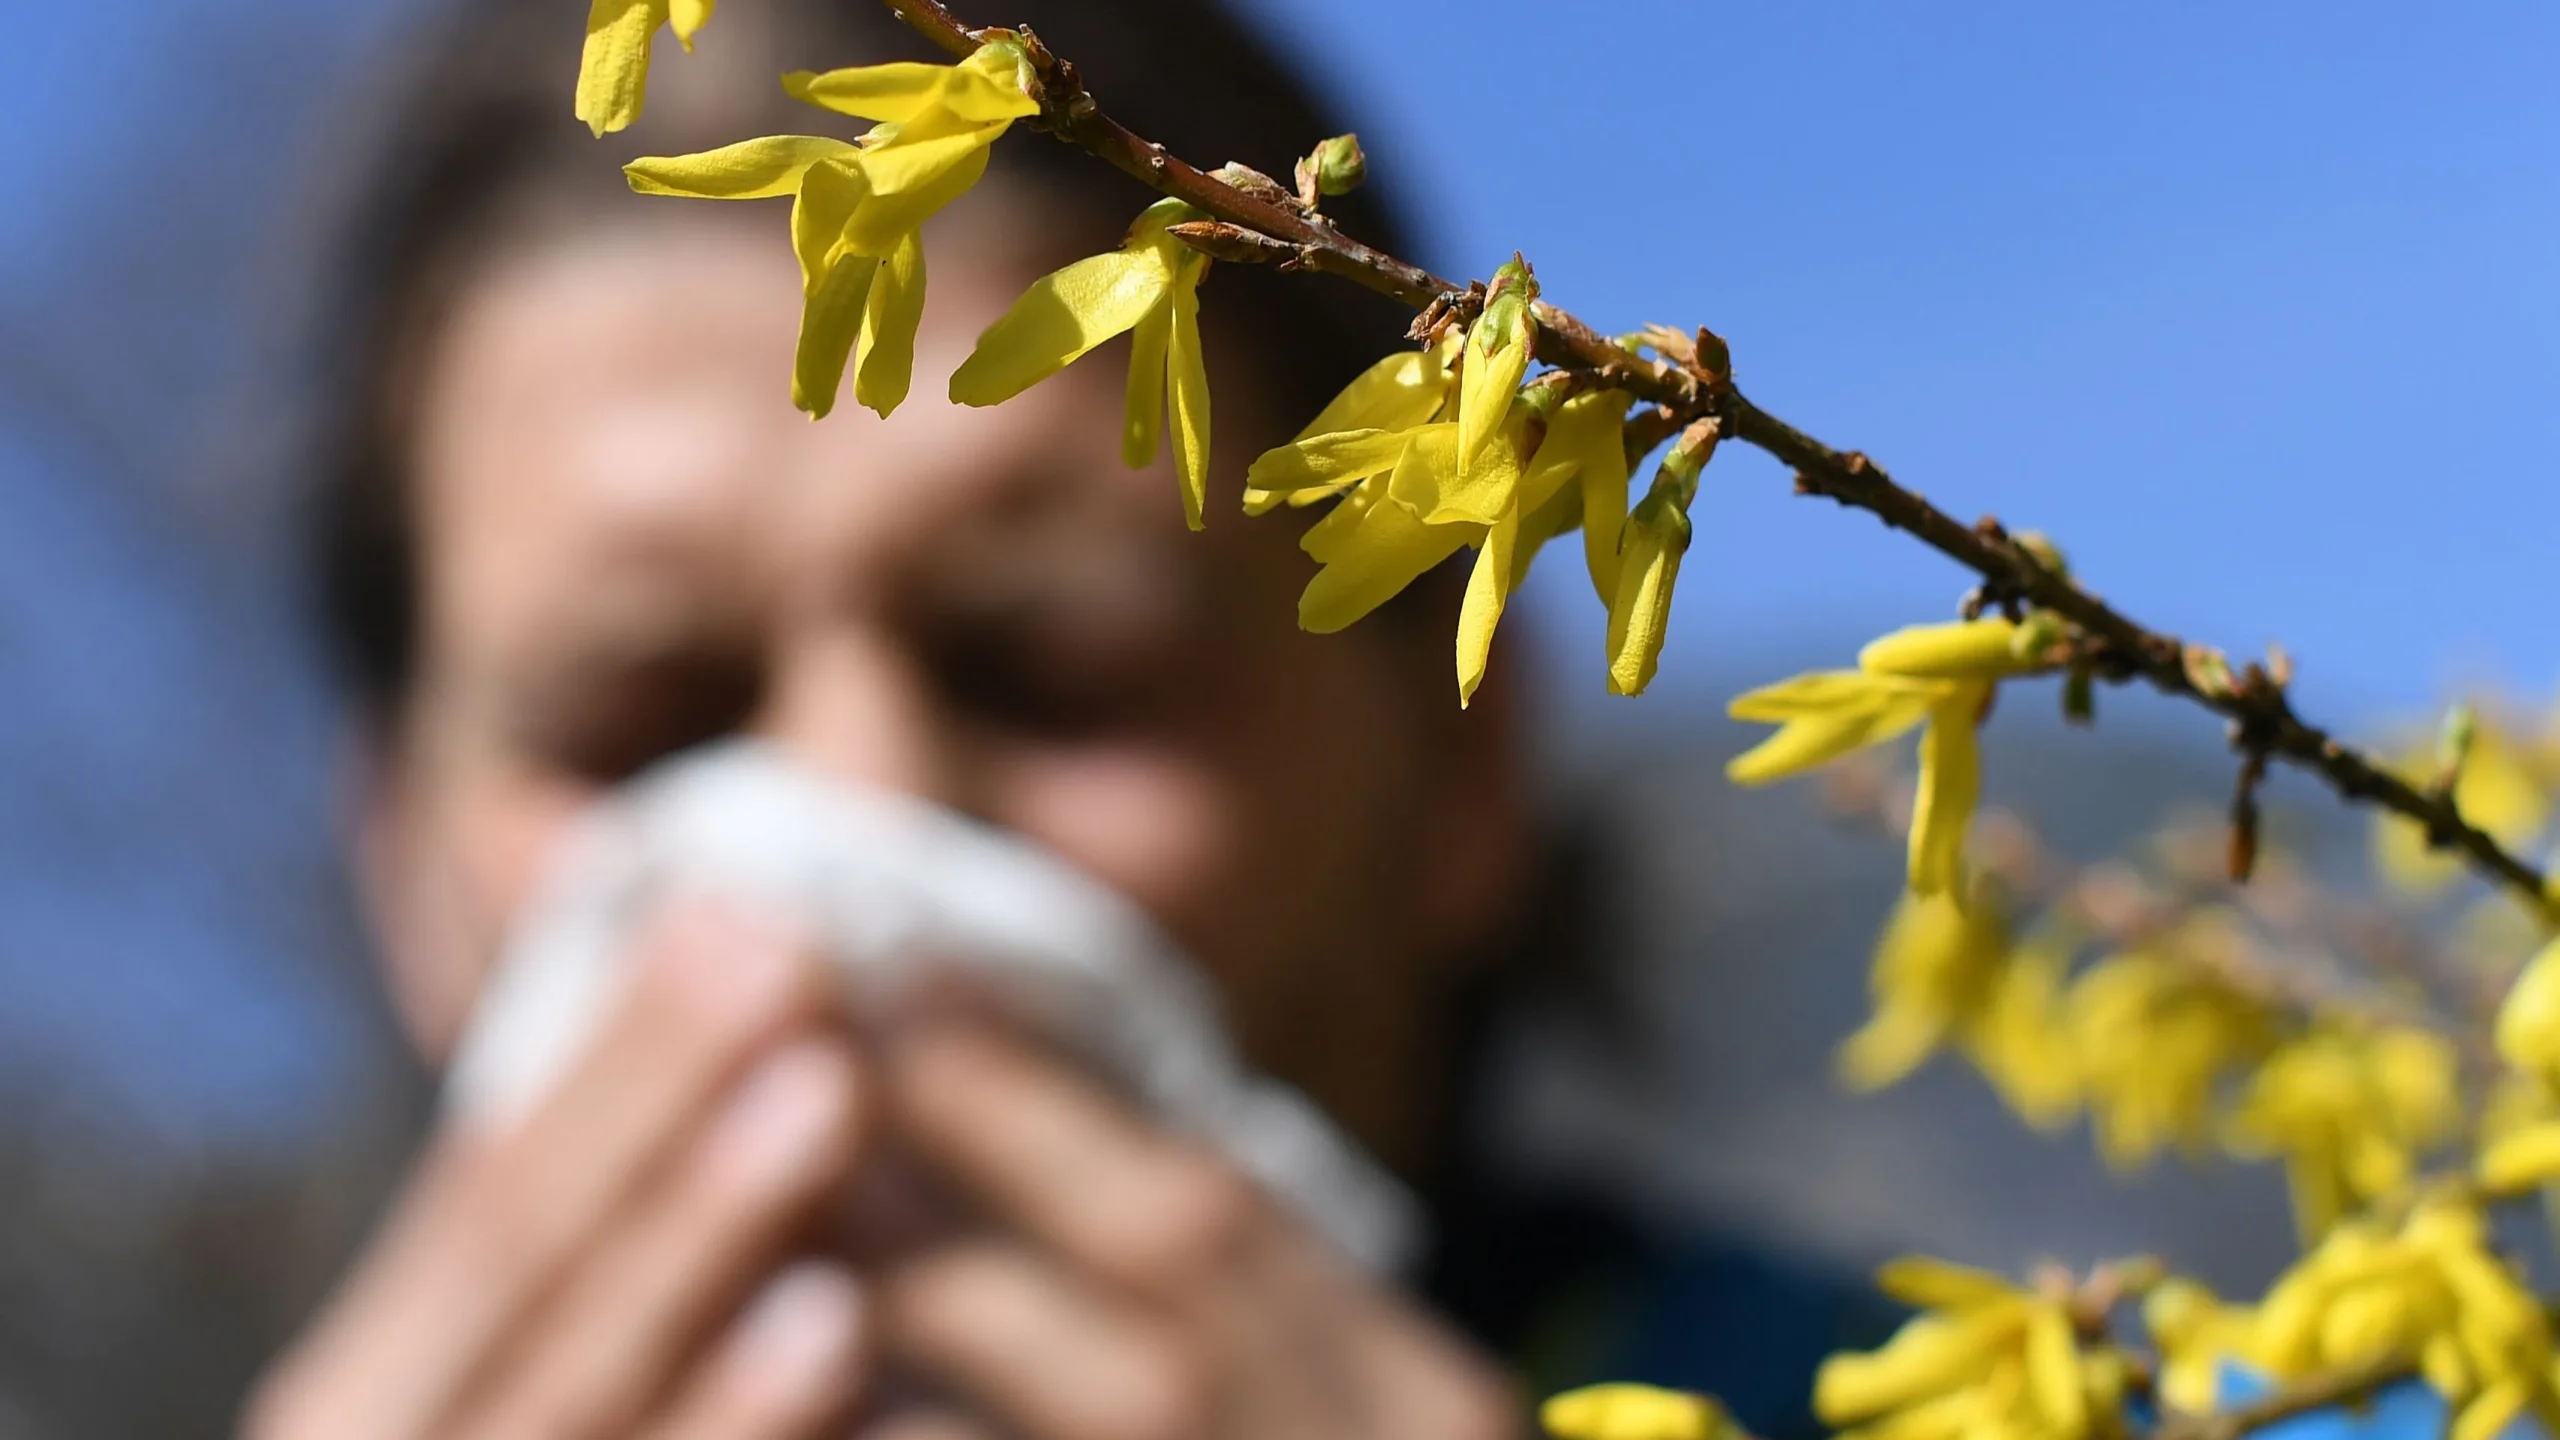 Alerta por niveles máximos de polen: el número de alérgicos se dispara en España